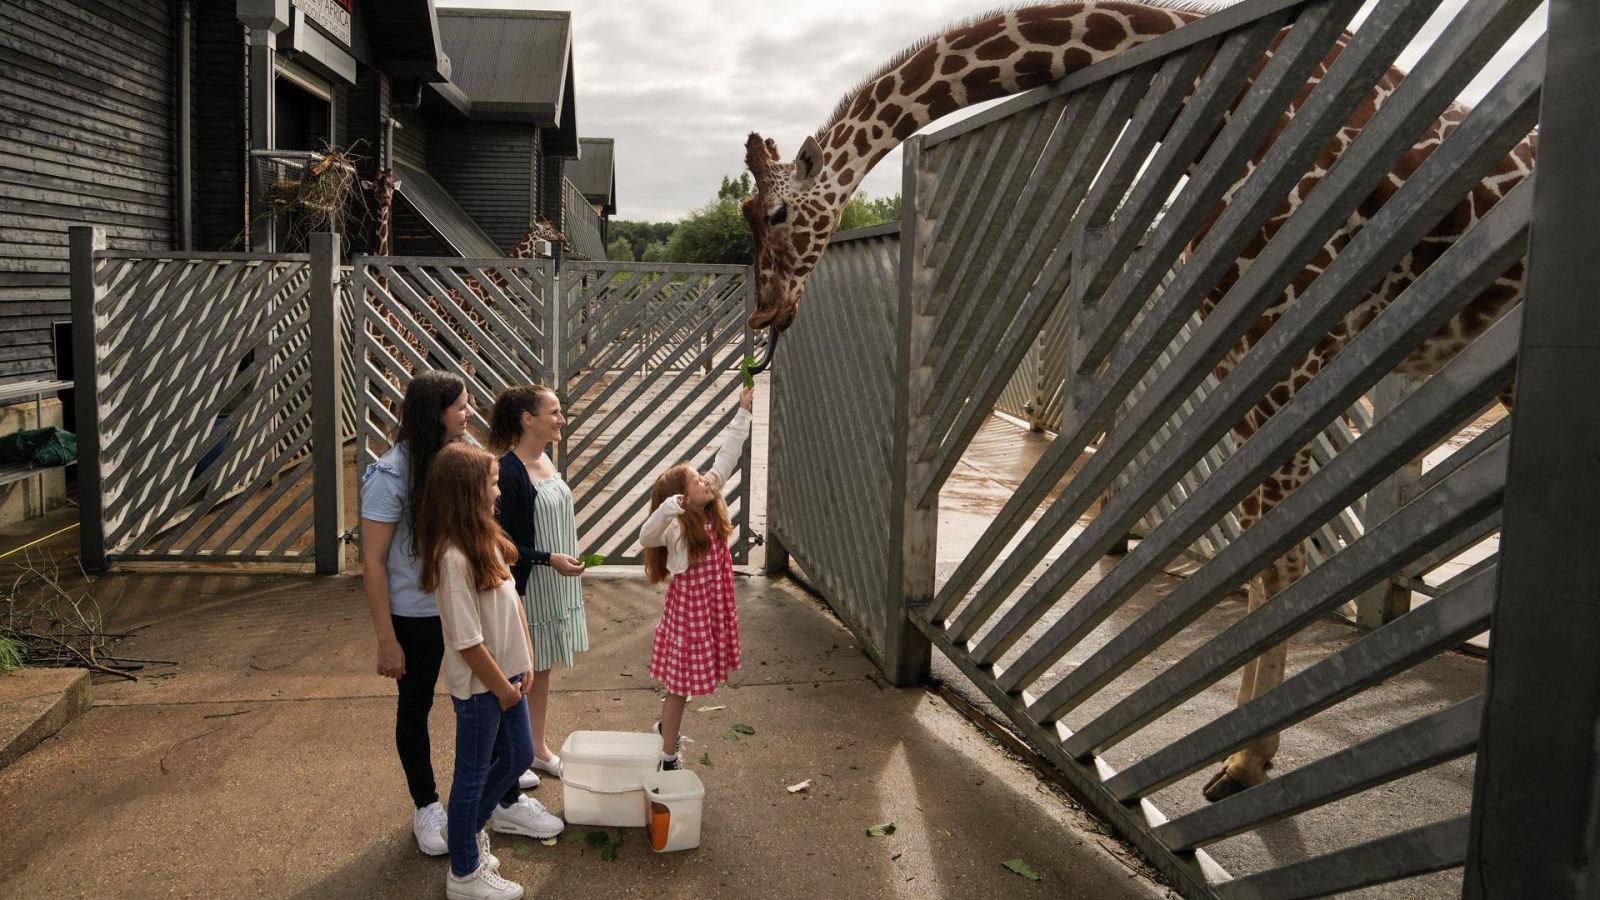 Giraffe feeding at Colchester Zoo